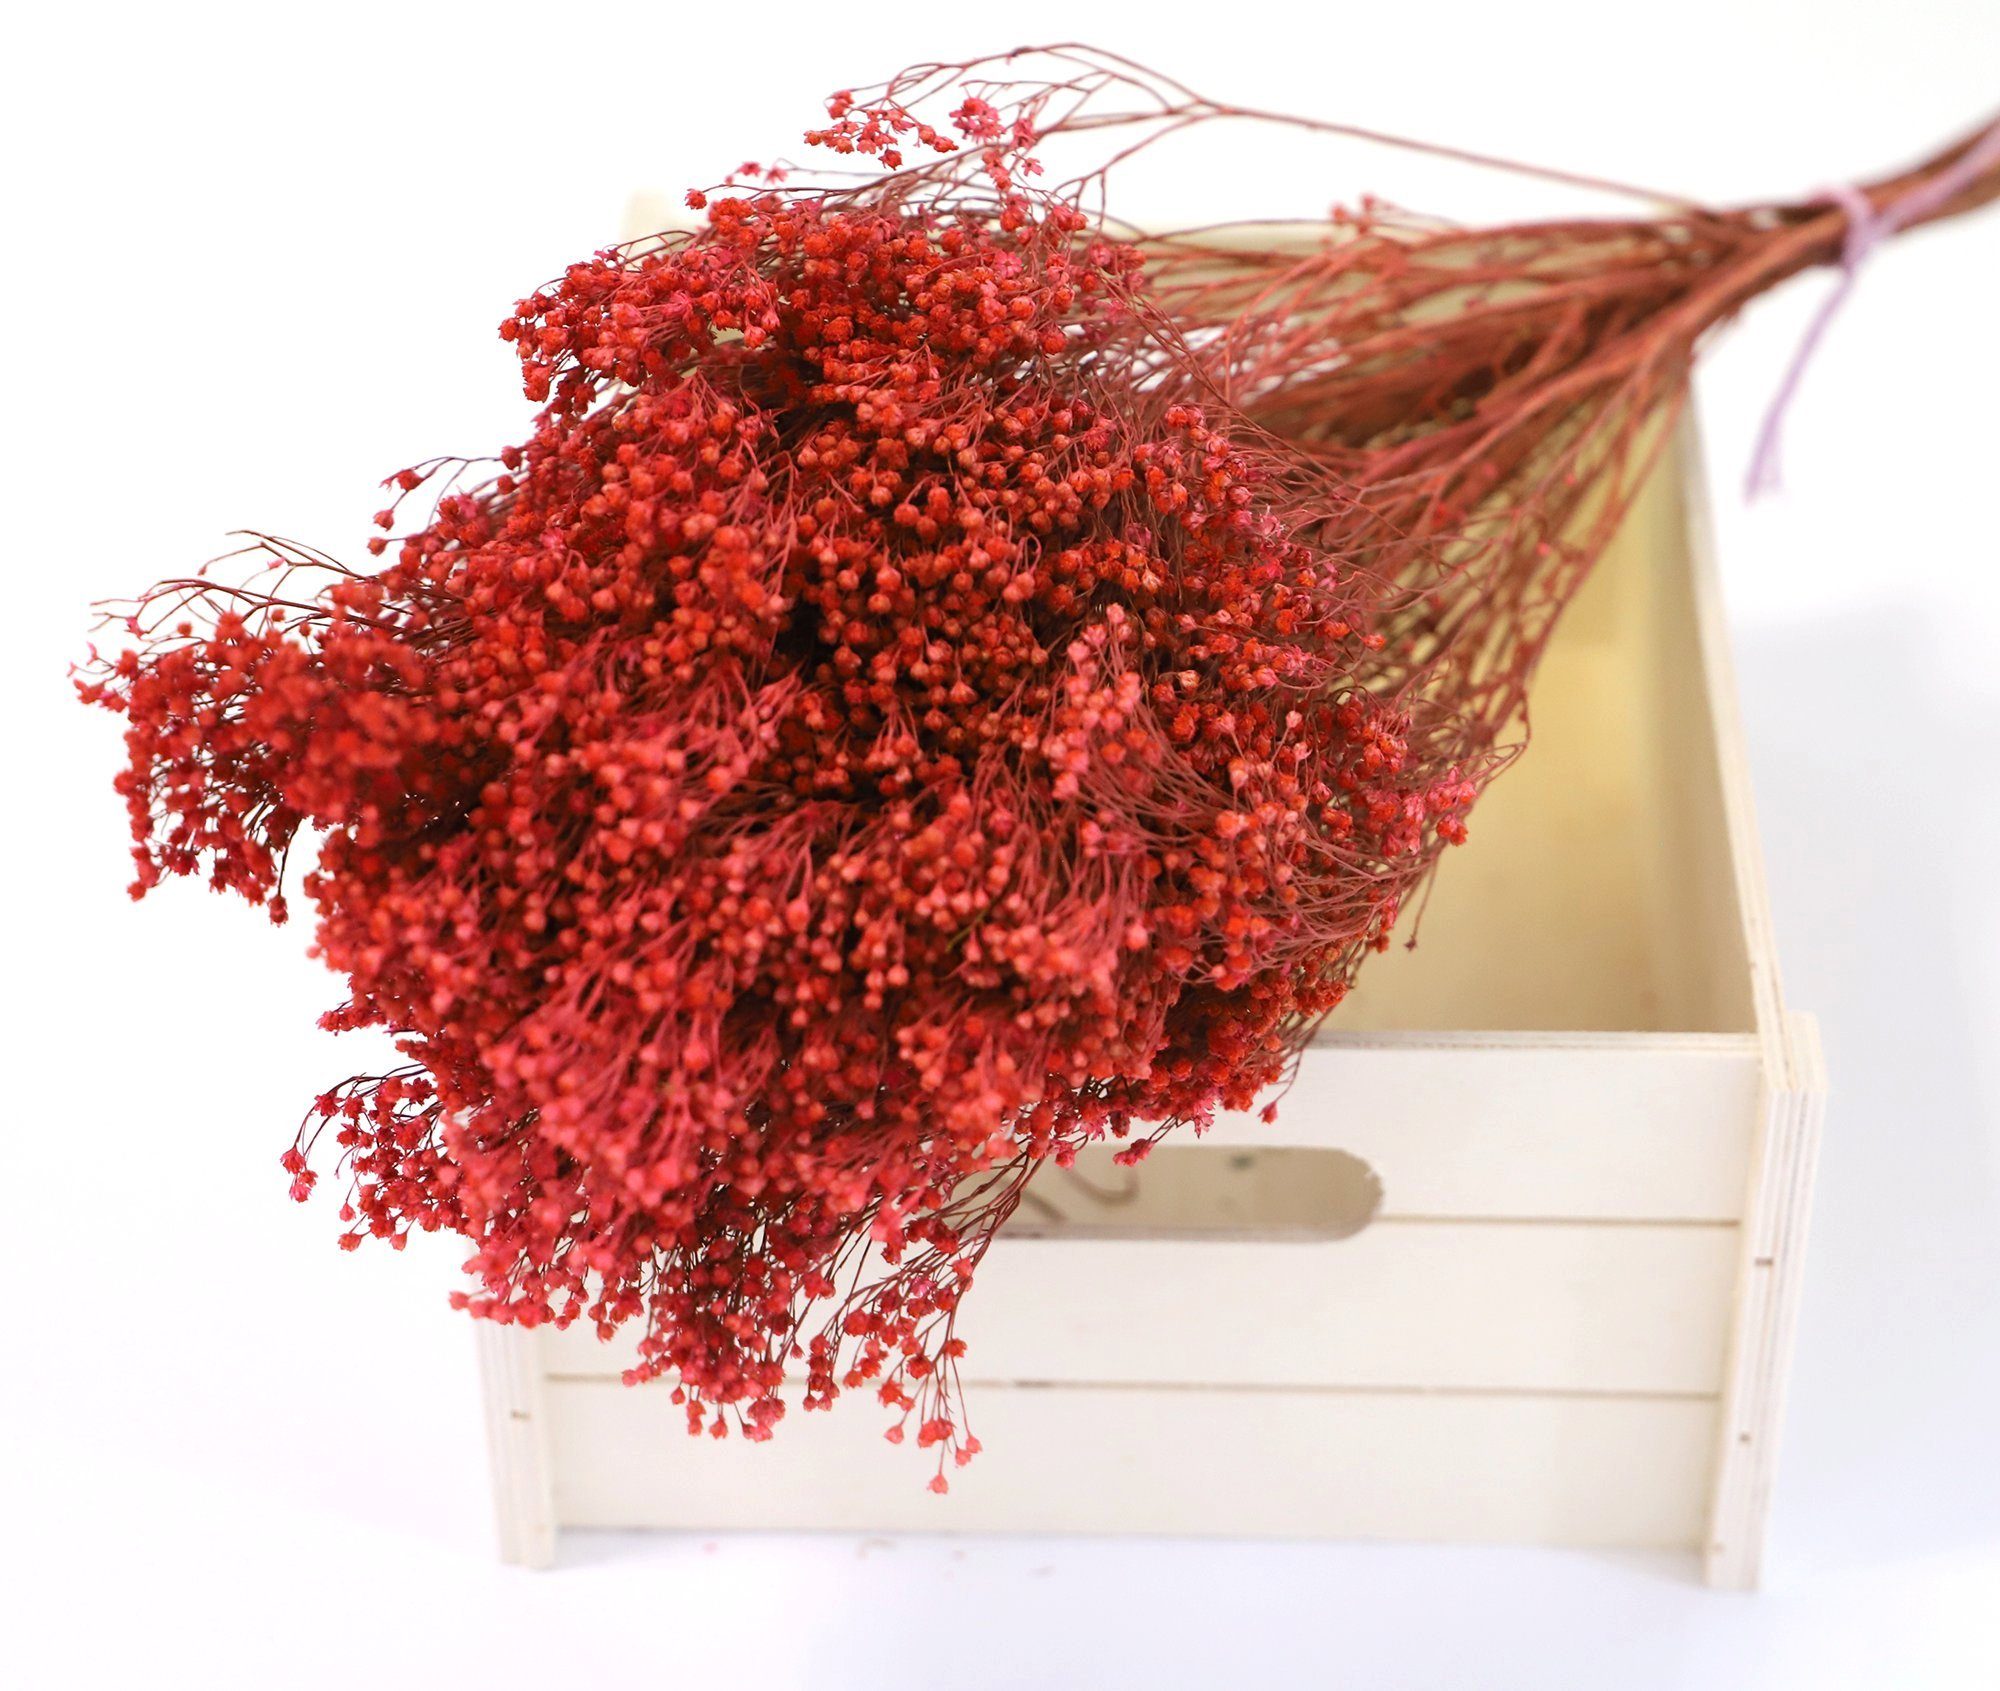 Getrocknet Rot, Trockenblume - Strauß Ginsterblüte Kunstharz.Art